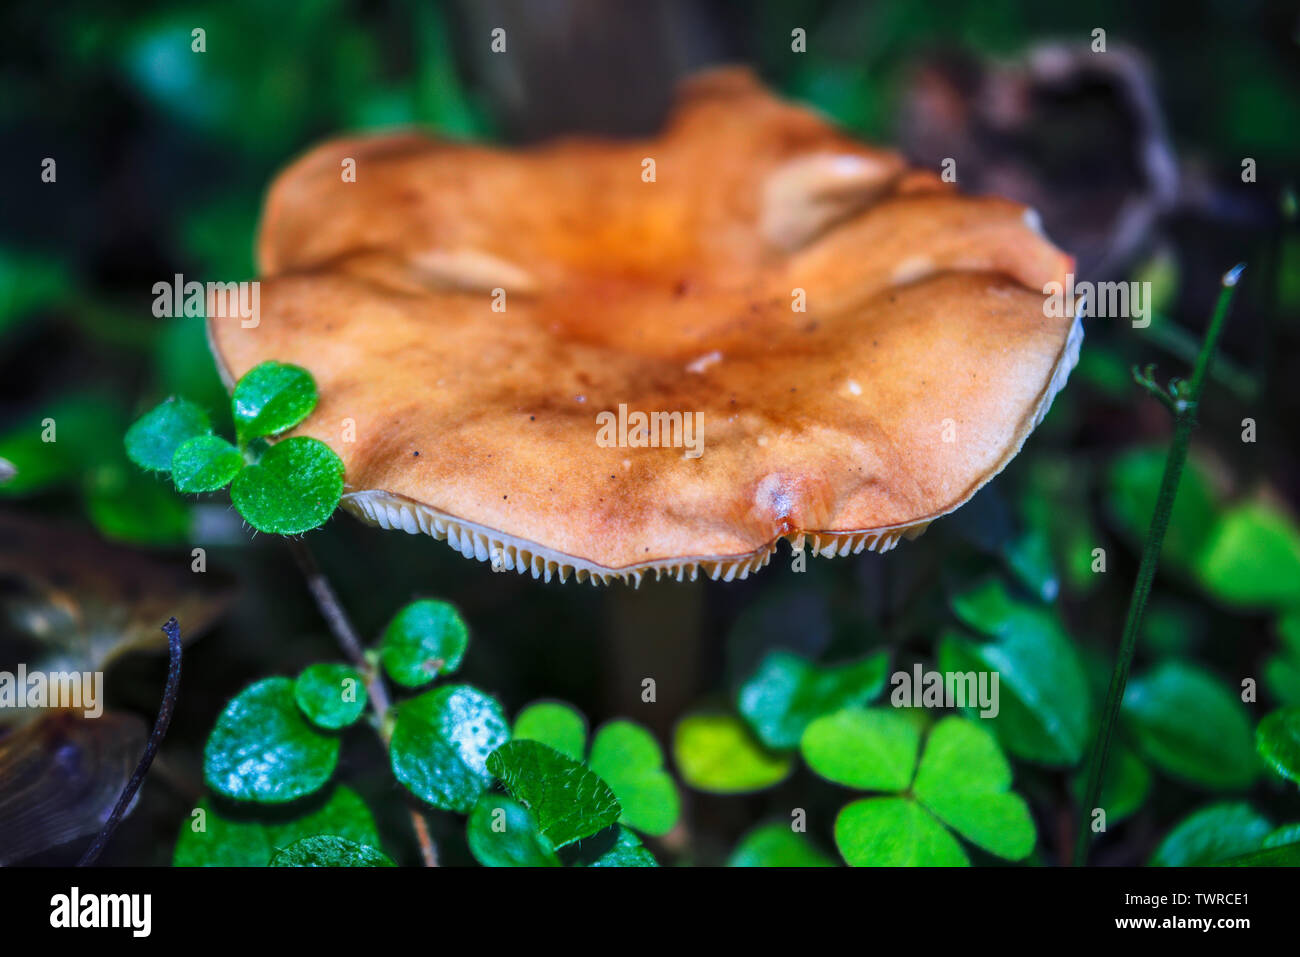 Forest mushroom russula close-up blurred dark background. Stock Photo